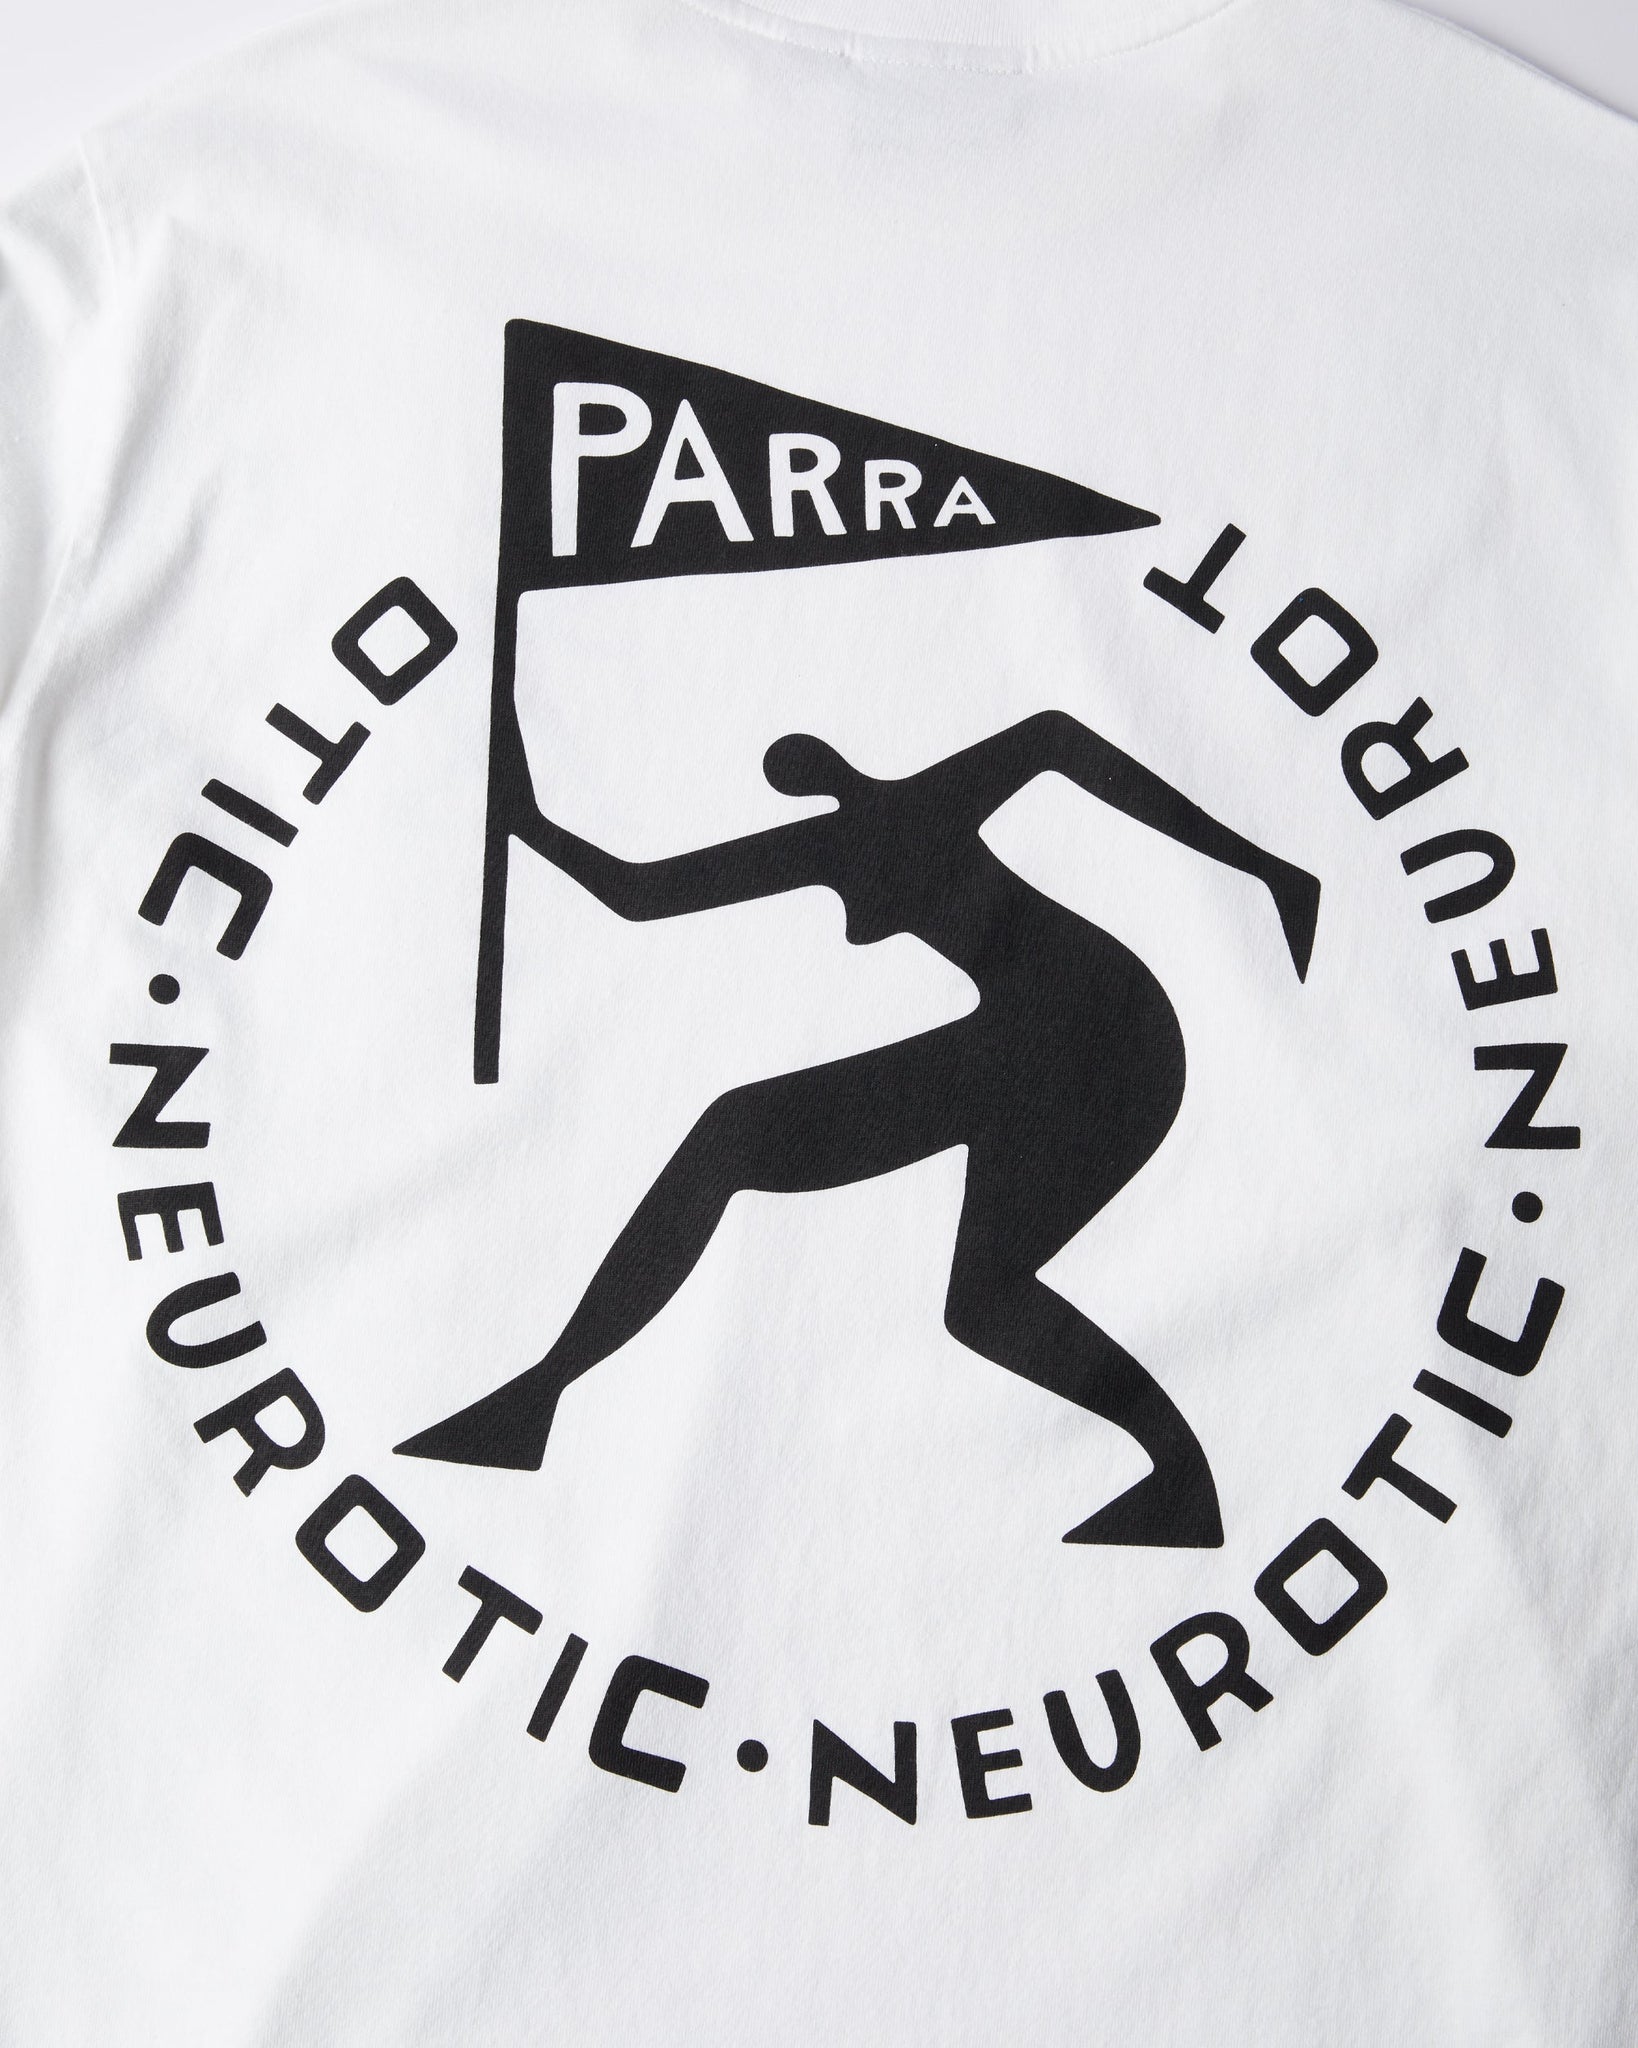 Neurotic flag long sleeve t-shirt - white